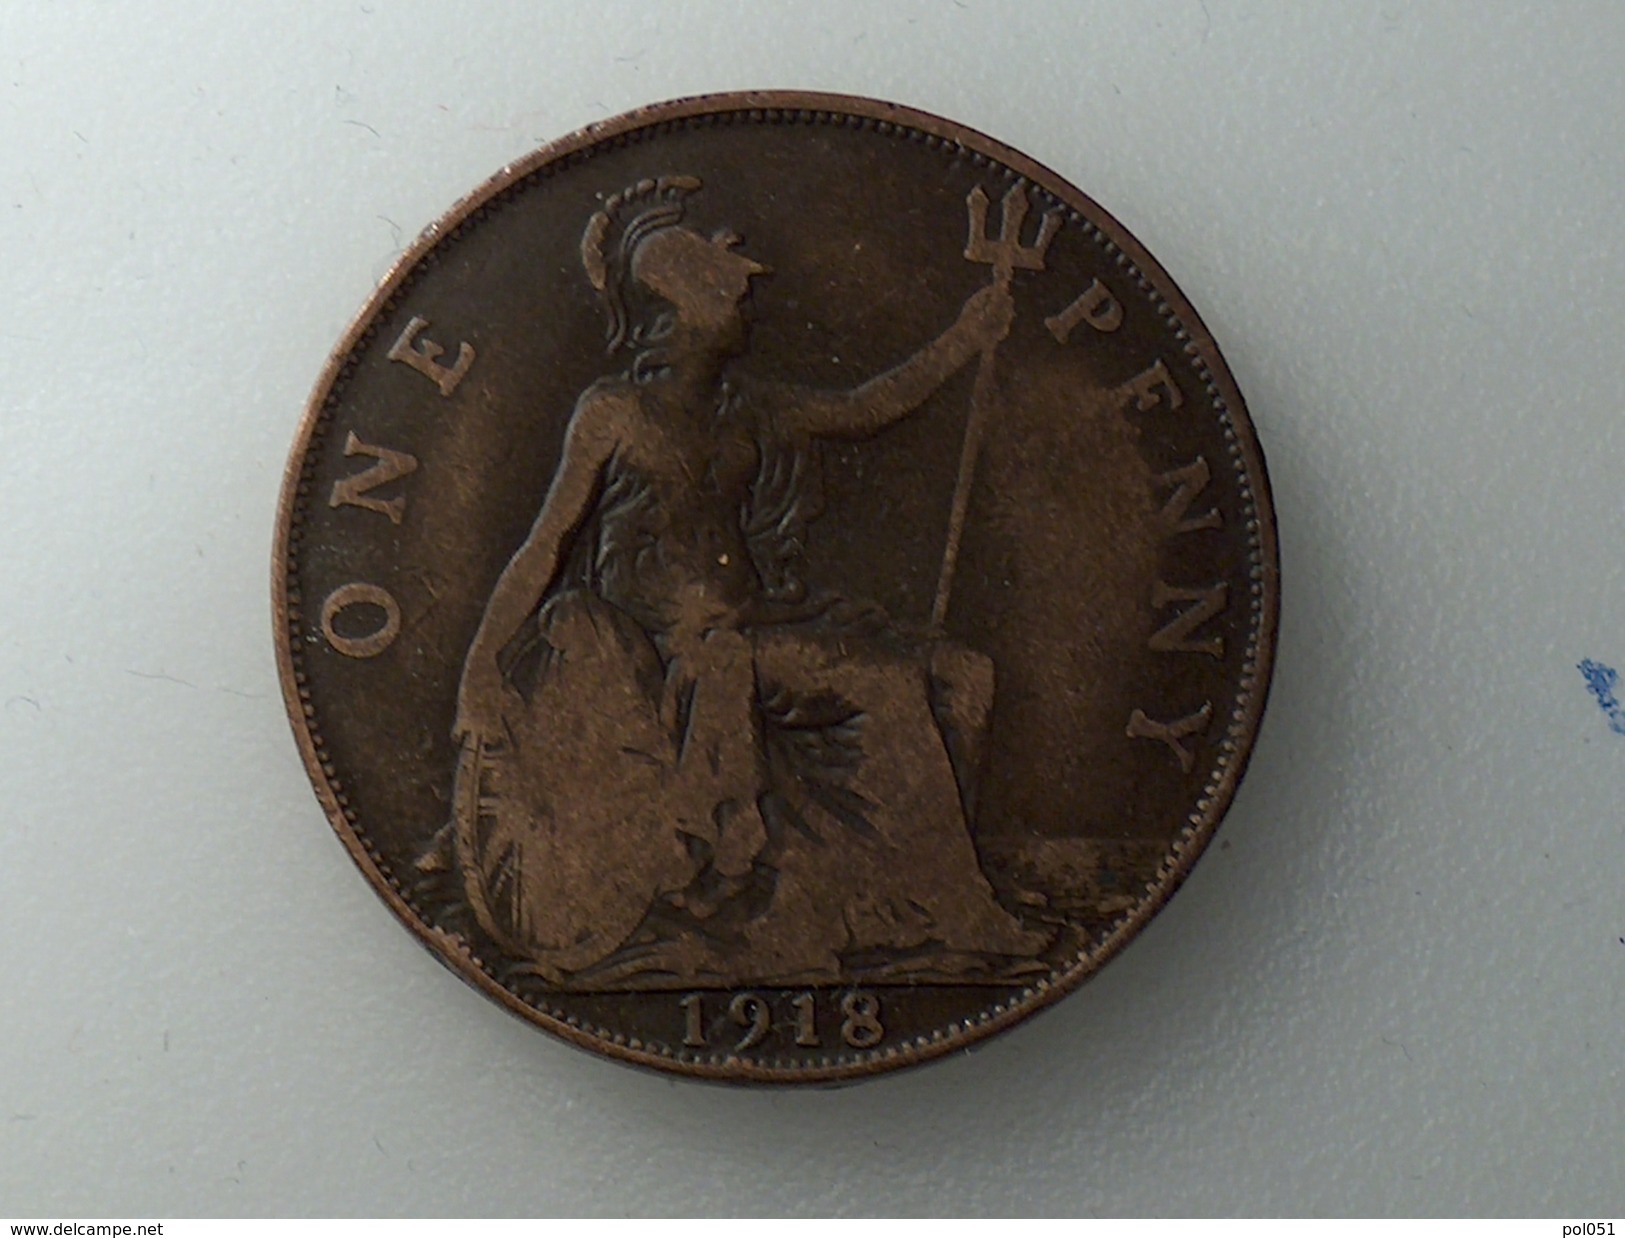 UK 1 PENNY 1918 ONE GRANDE BRETAGNE - D. 1 Penny